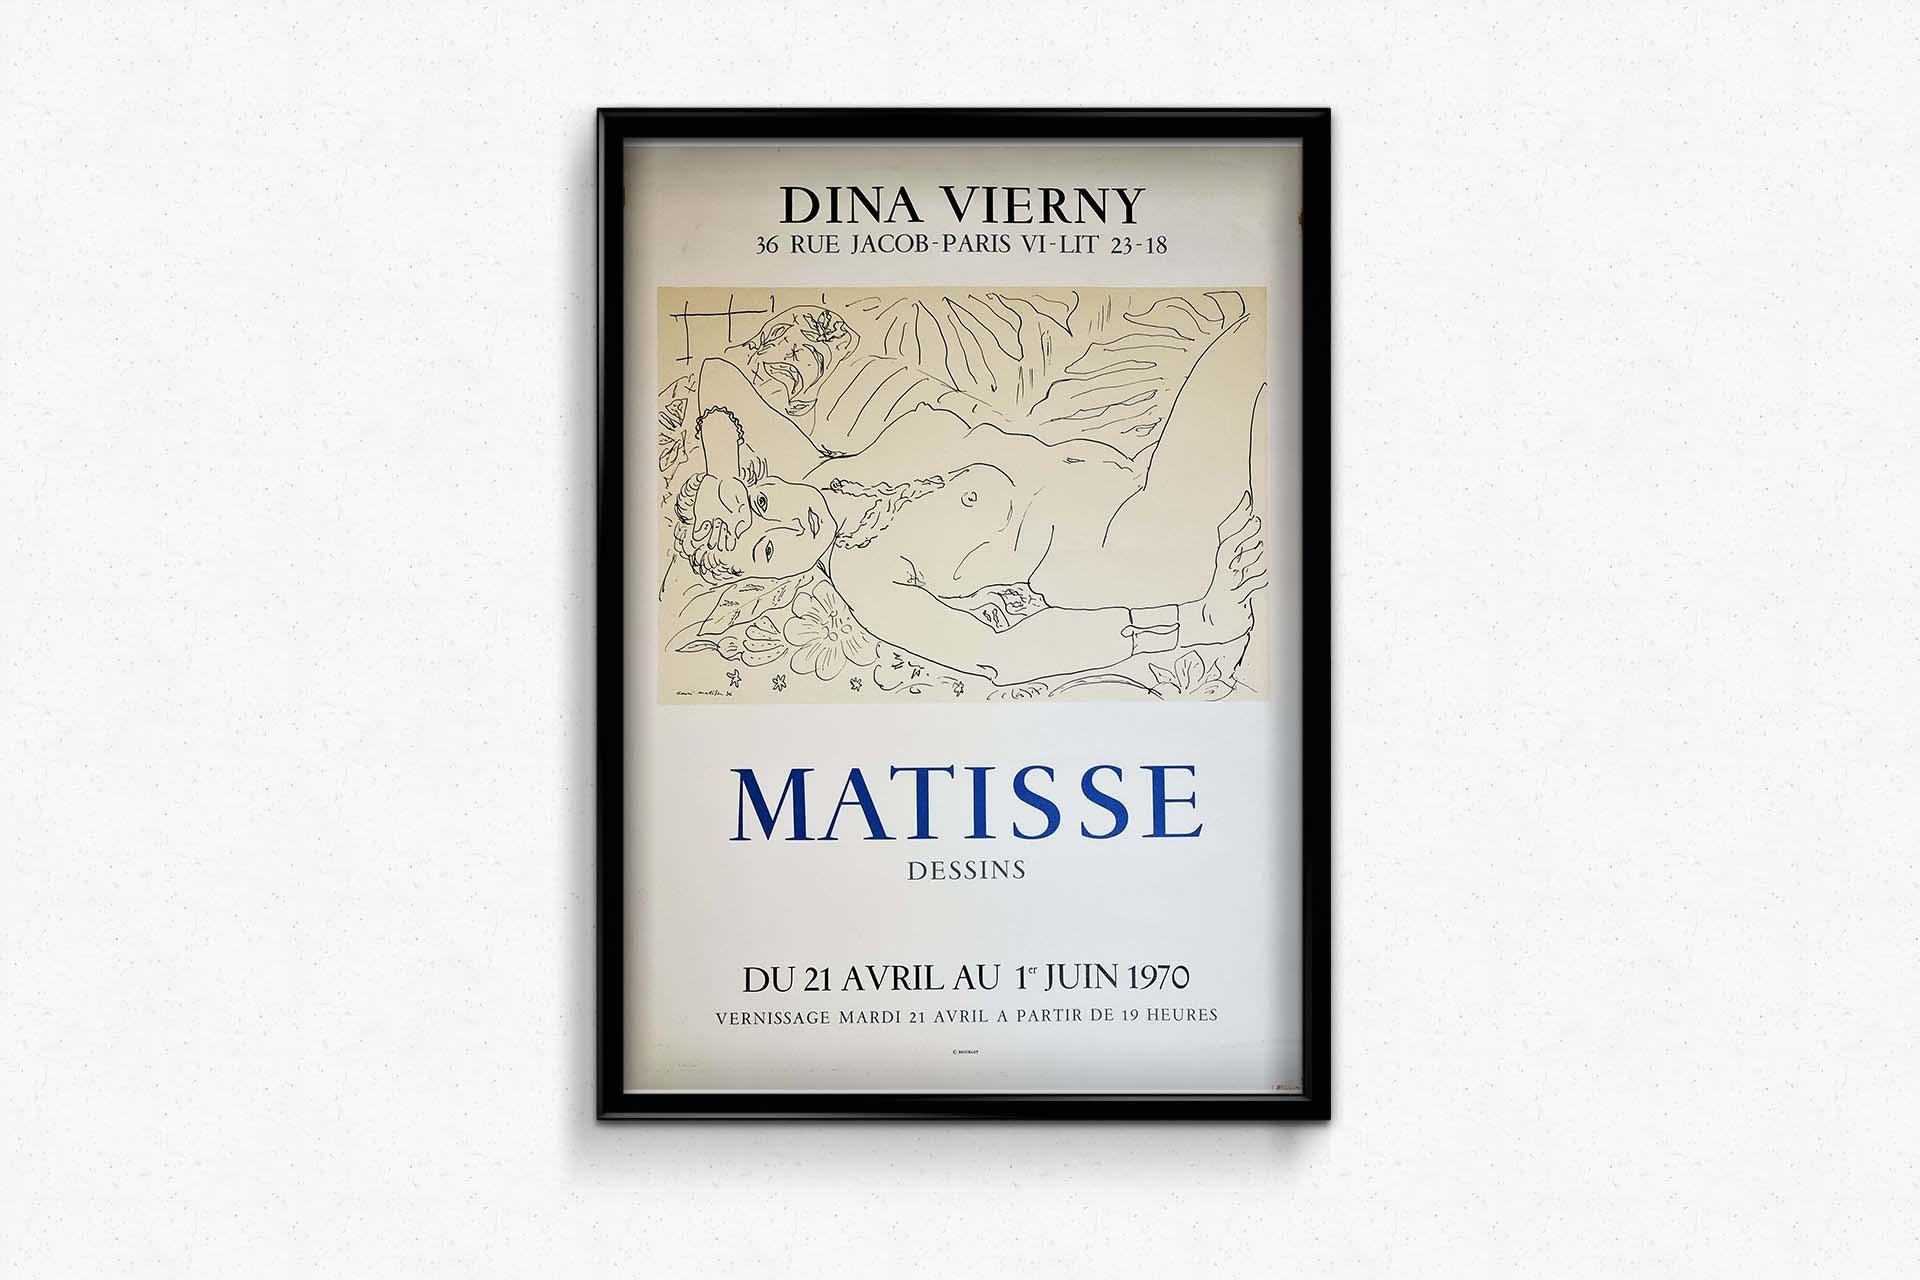 1970 original poster - Henri Matisse's drawings at the Dina Vierny Gallery 1